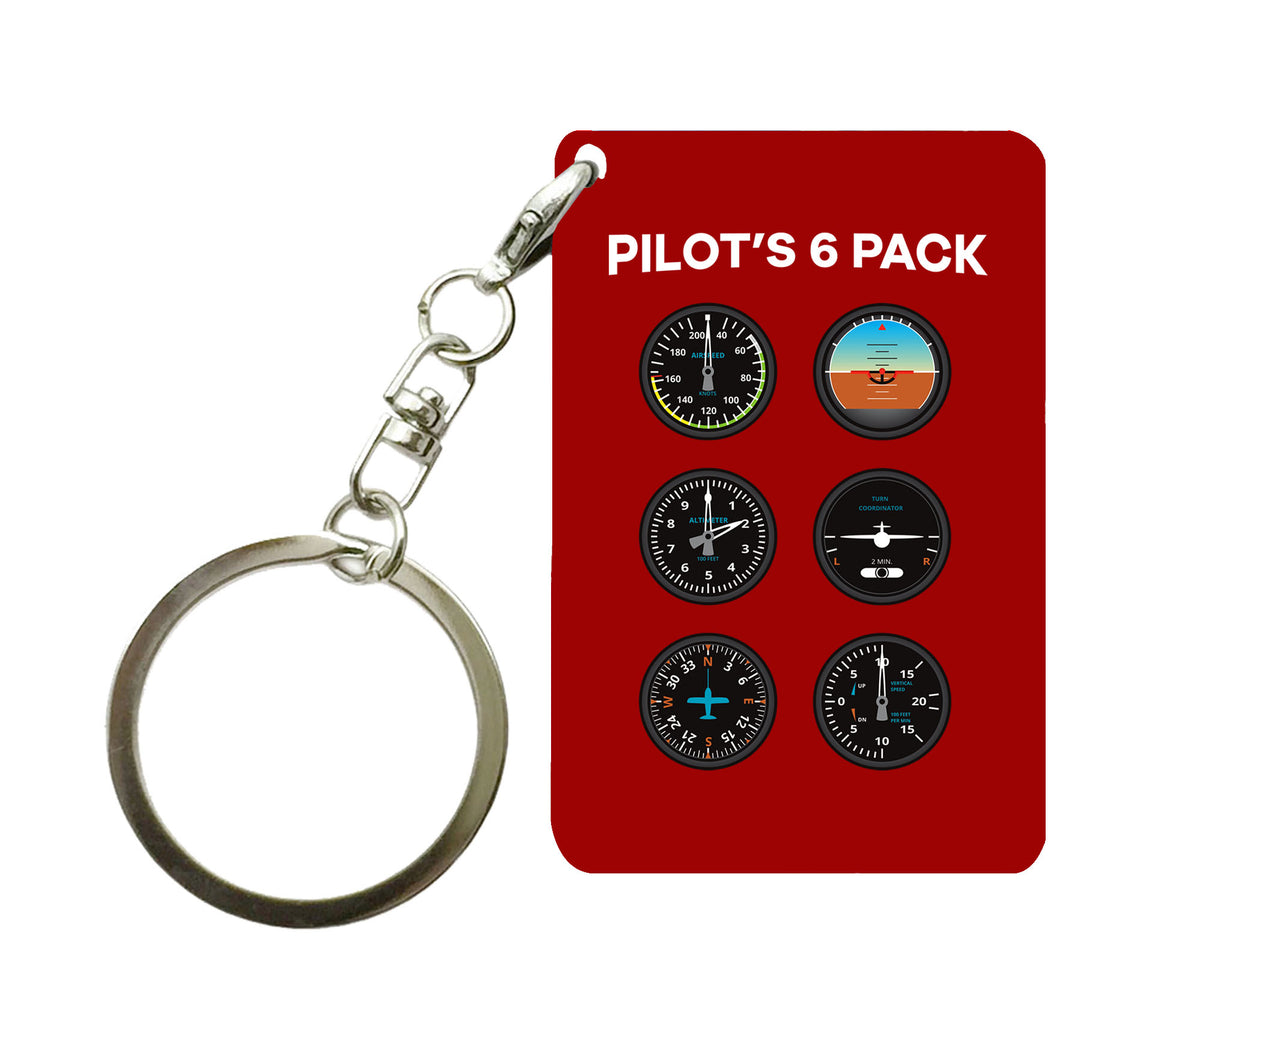 Pilot's 6 Pack Designed Key Chains